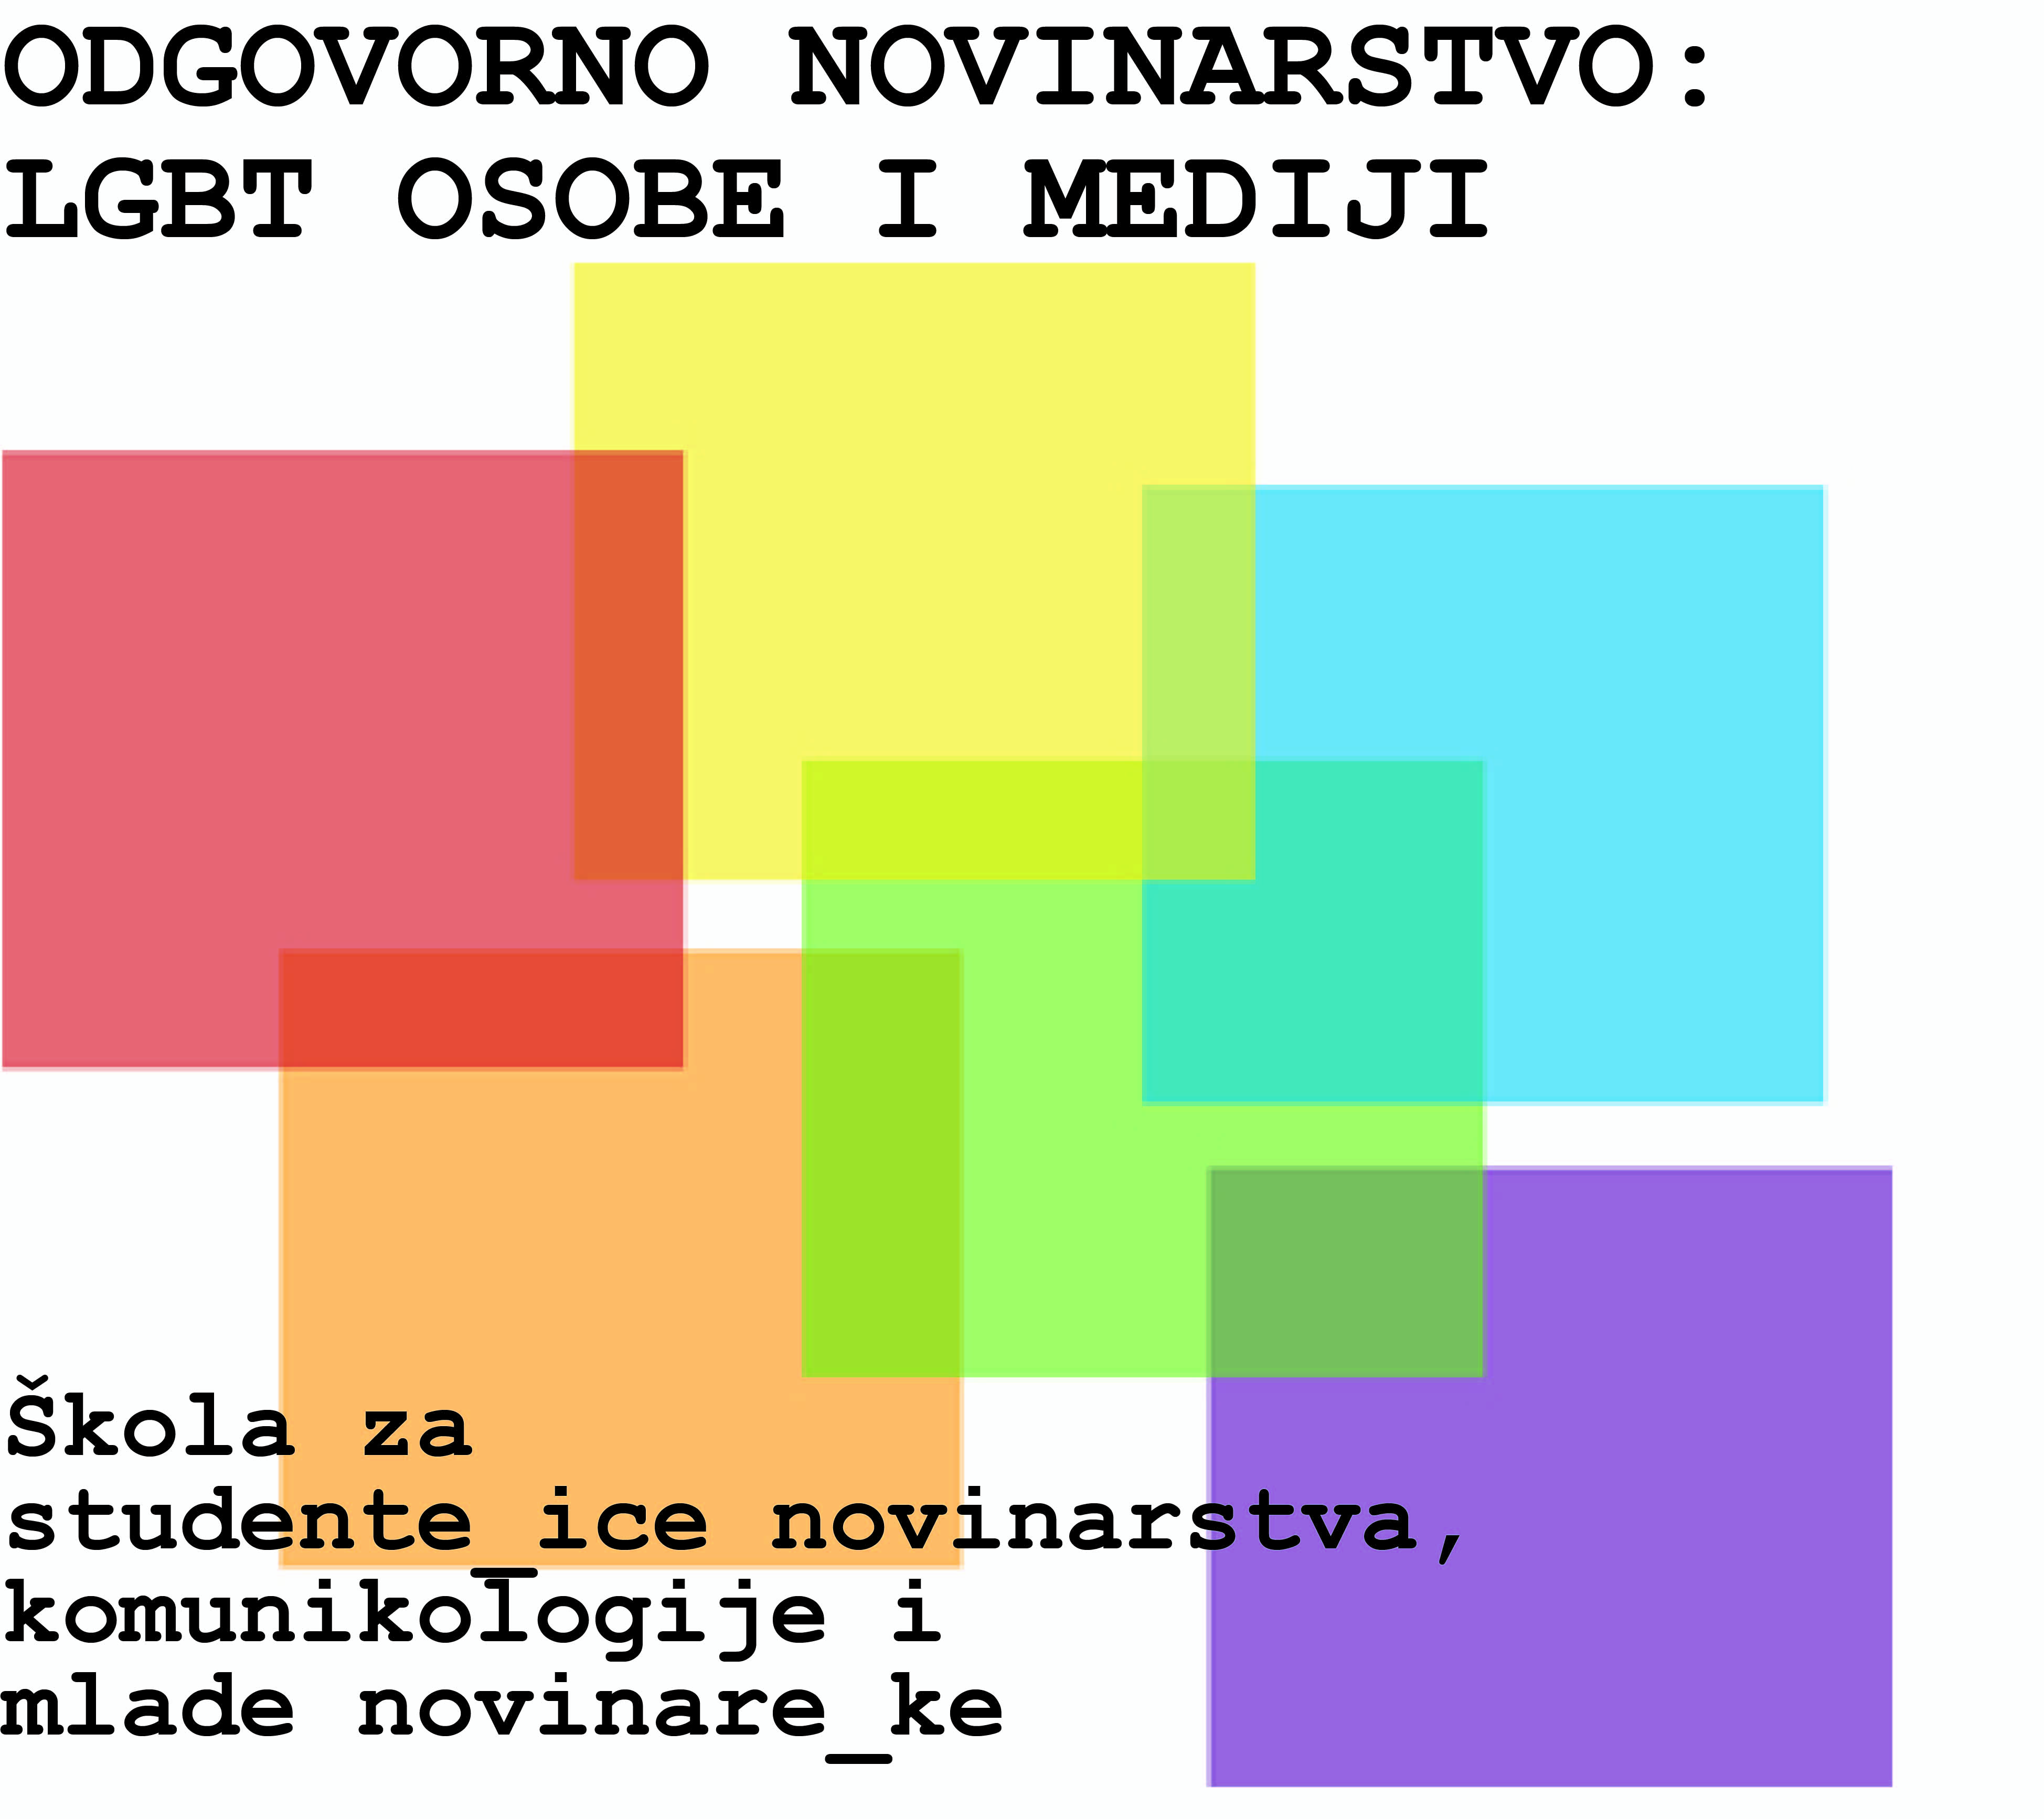 FINAL_logo_LGBT skola_DRUGI TEKST